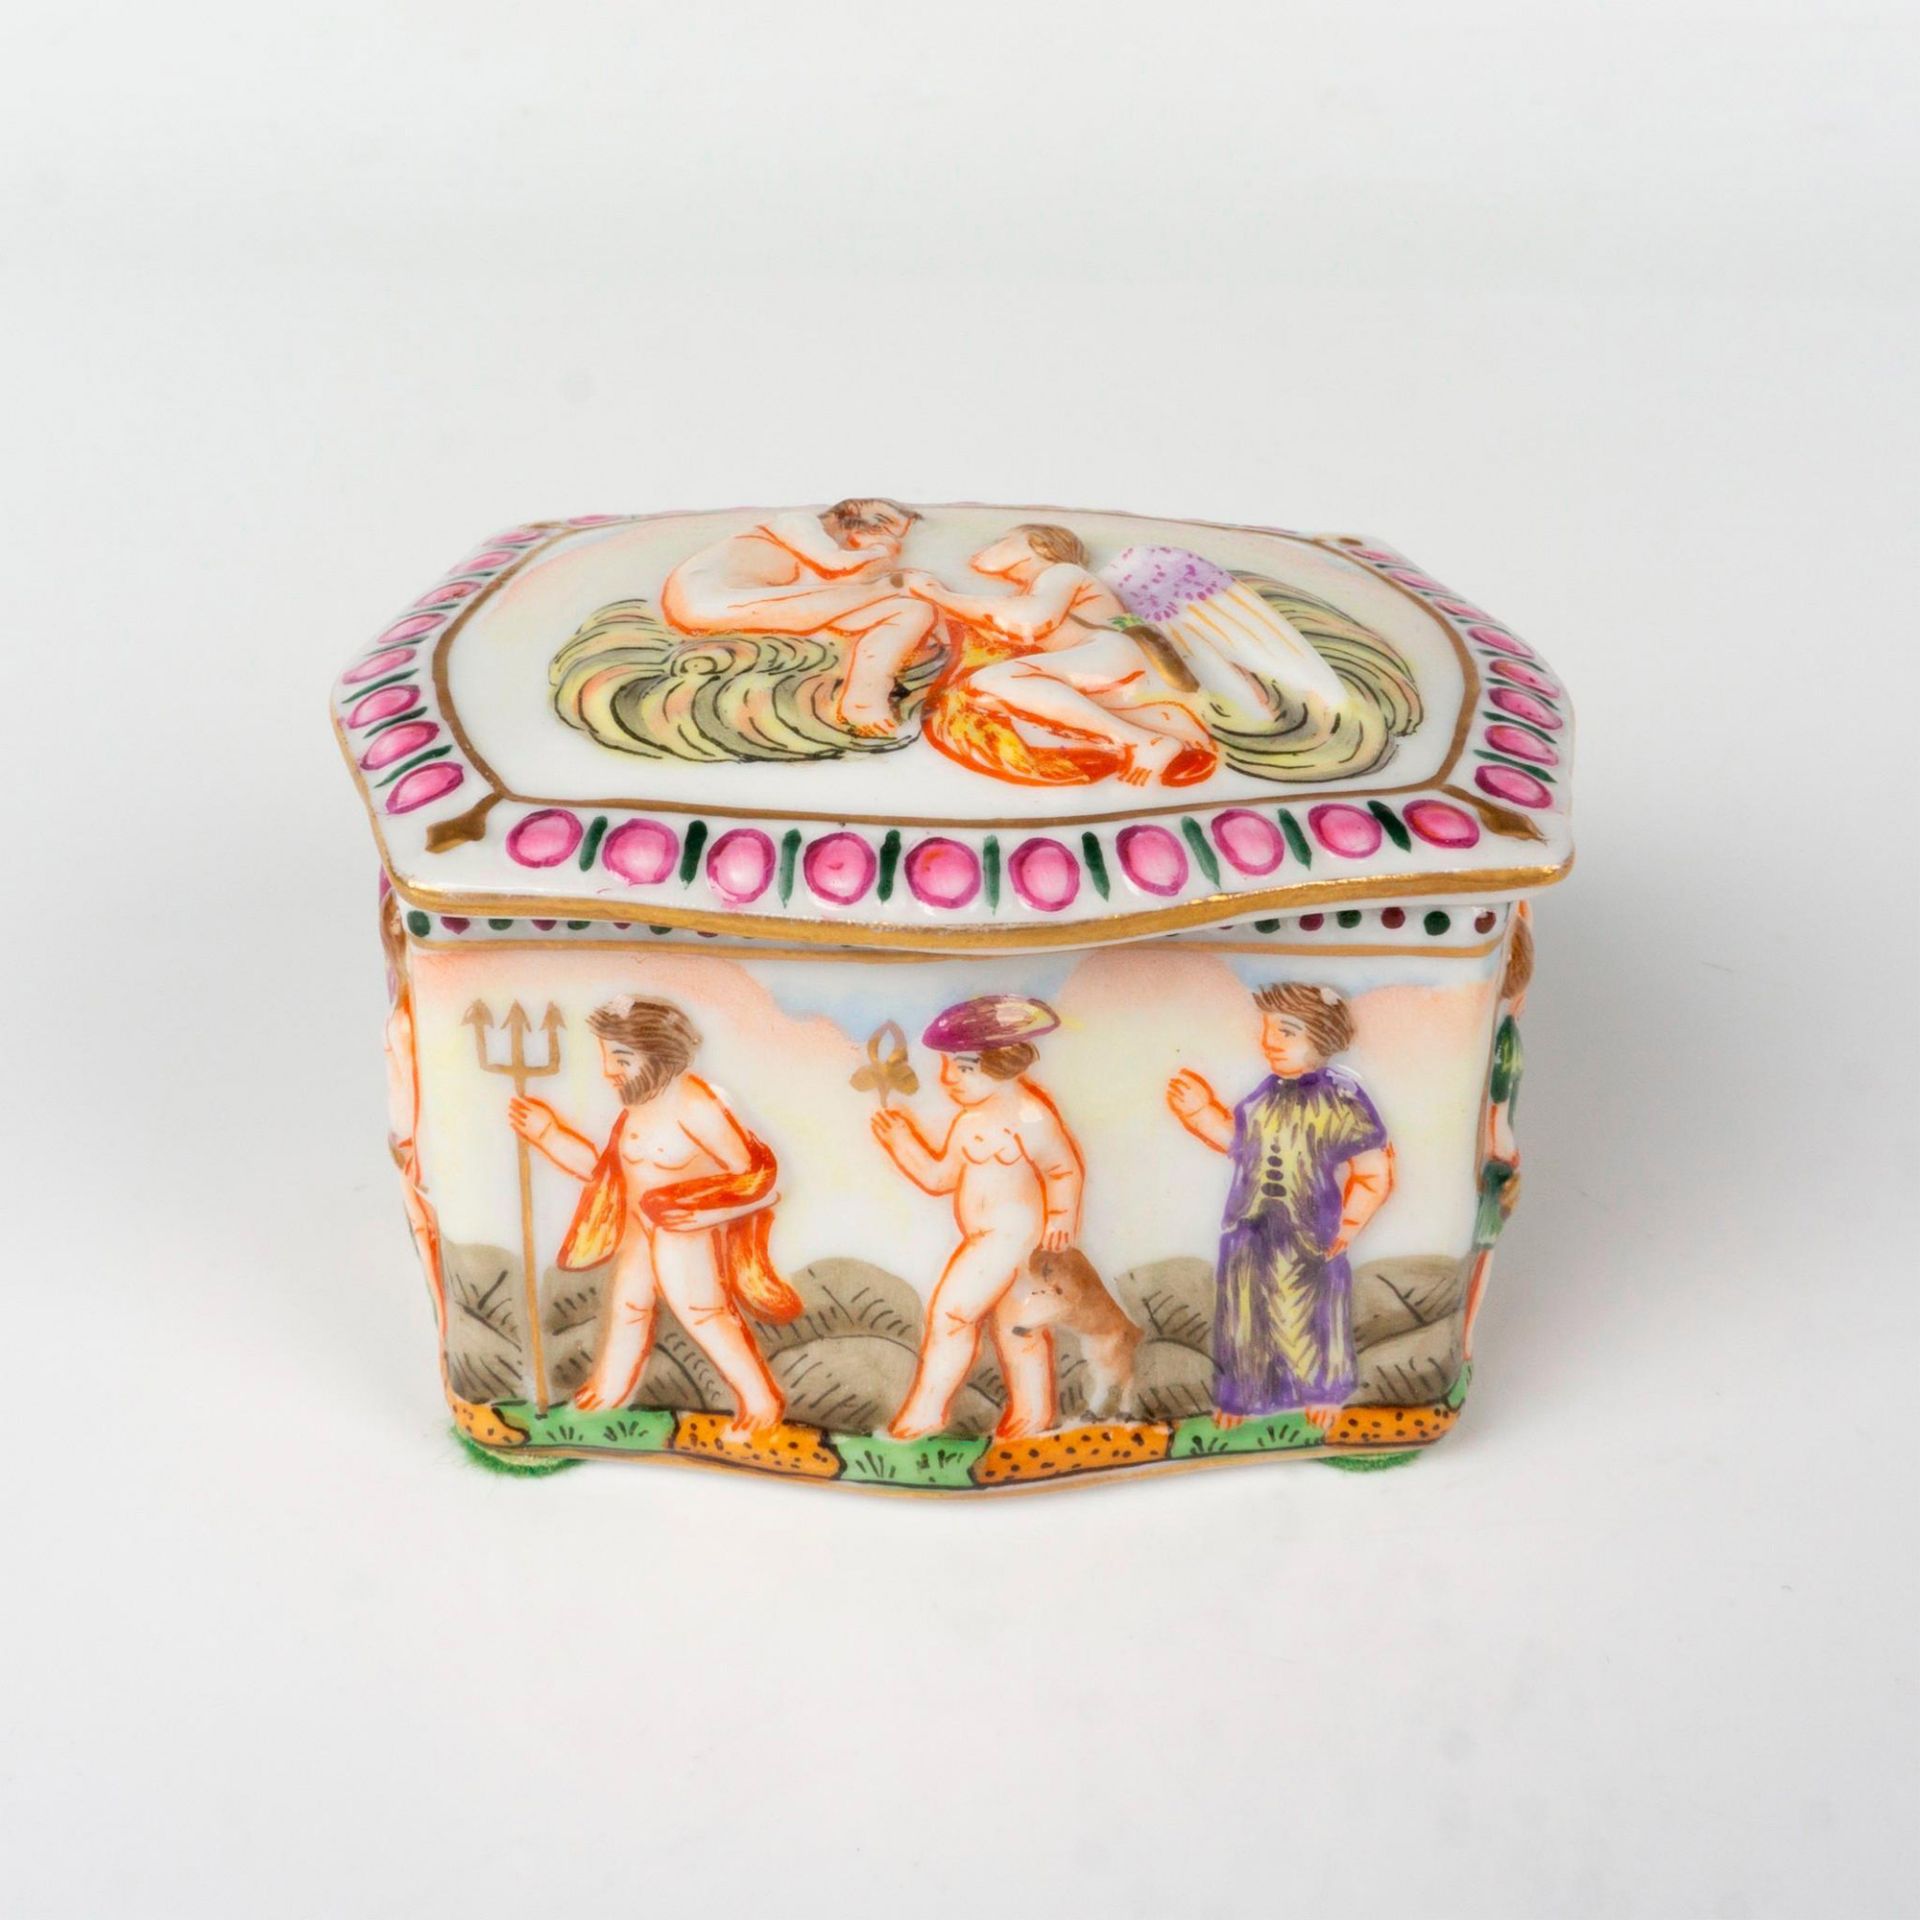 Capodimonte Porcelain Lidded Trinket Box